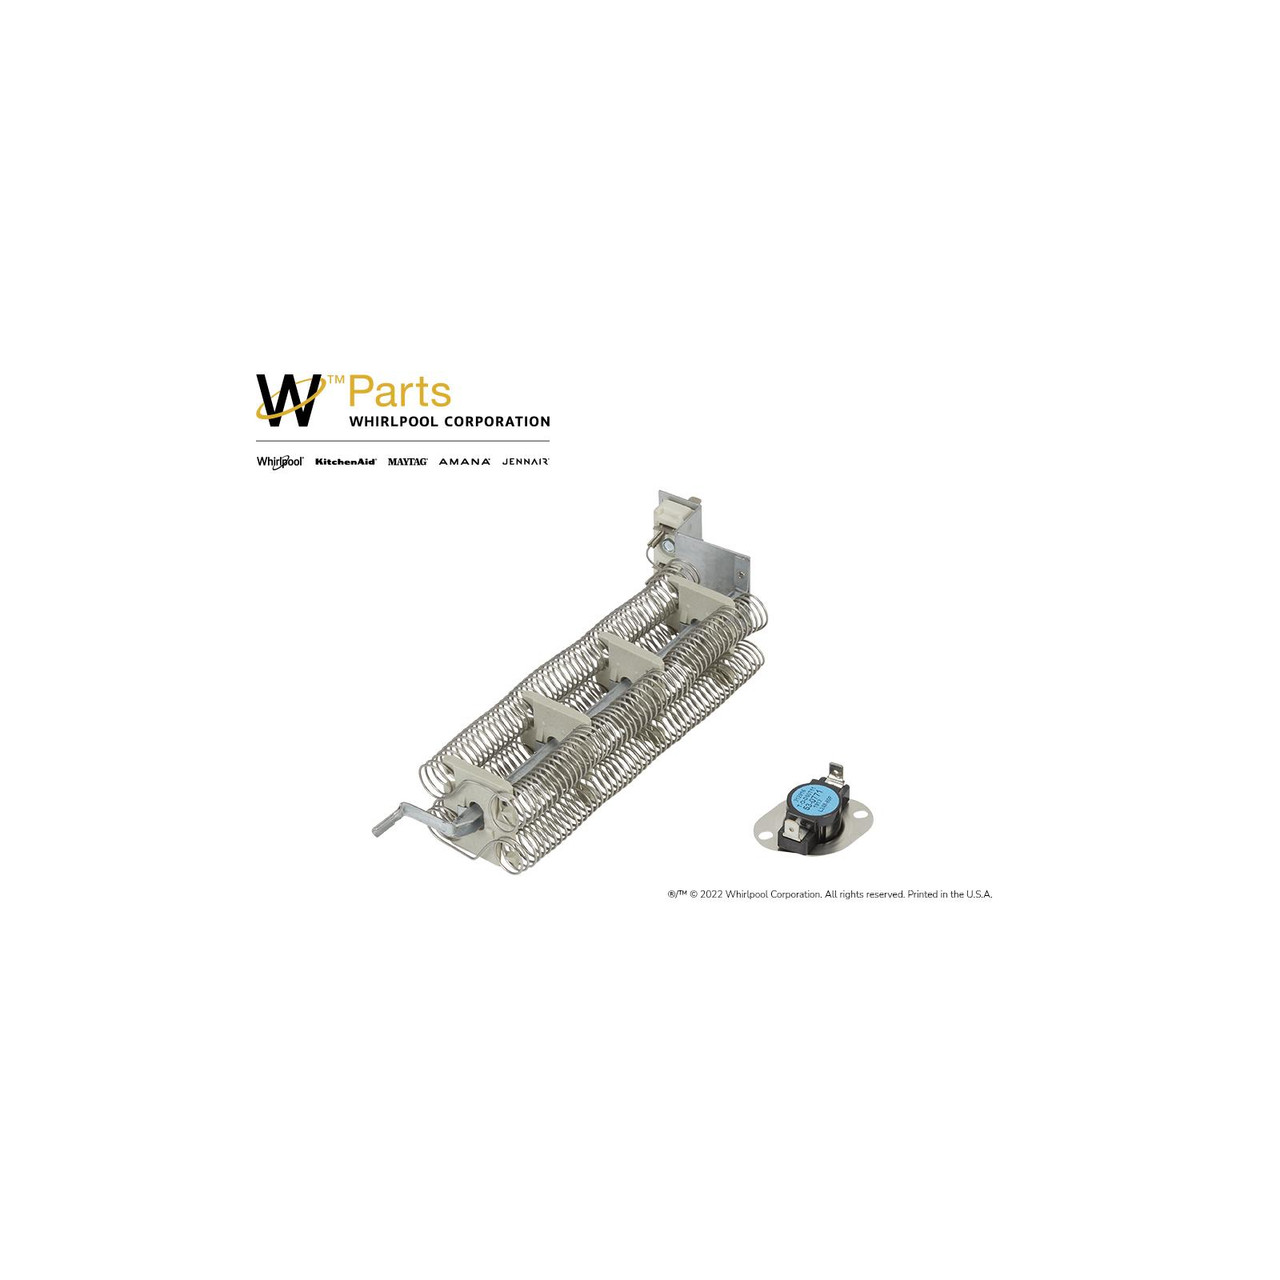 Whirlpool LA-1044 - Dryer Heating Element Kit - Image # 6